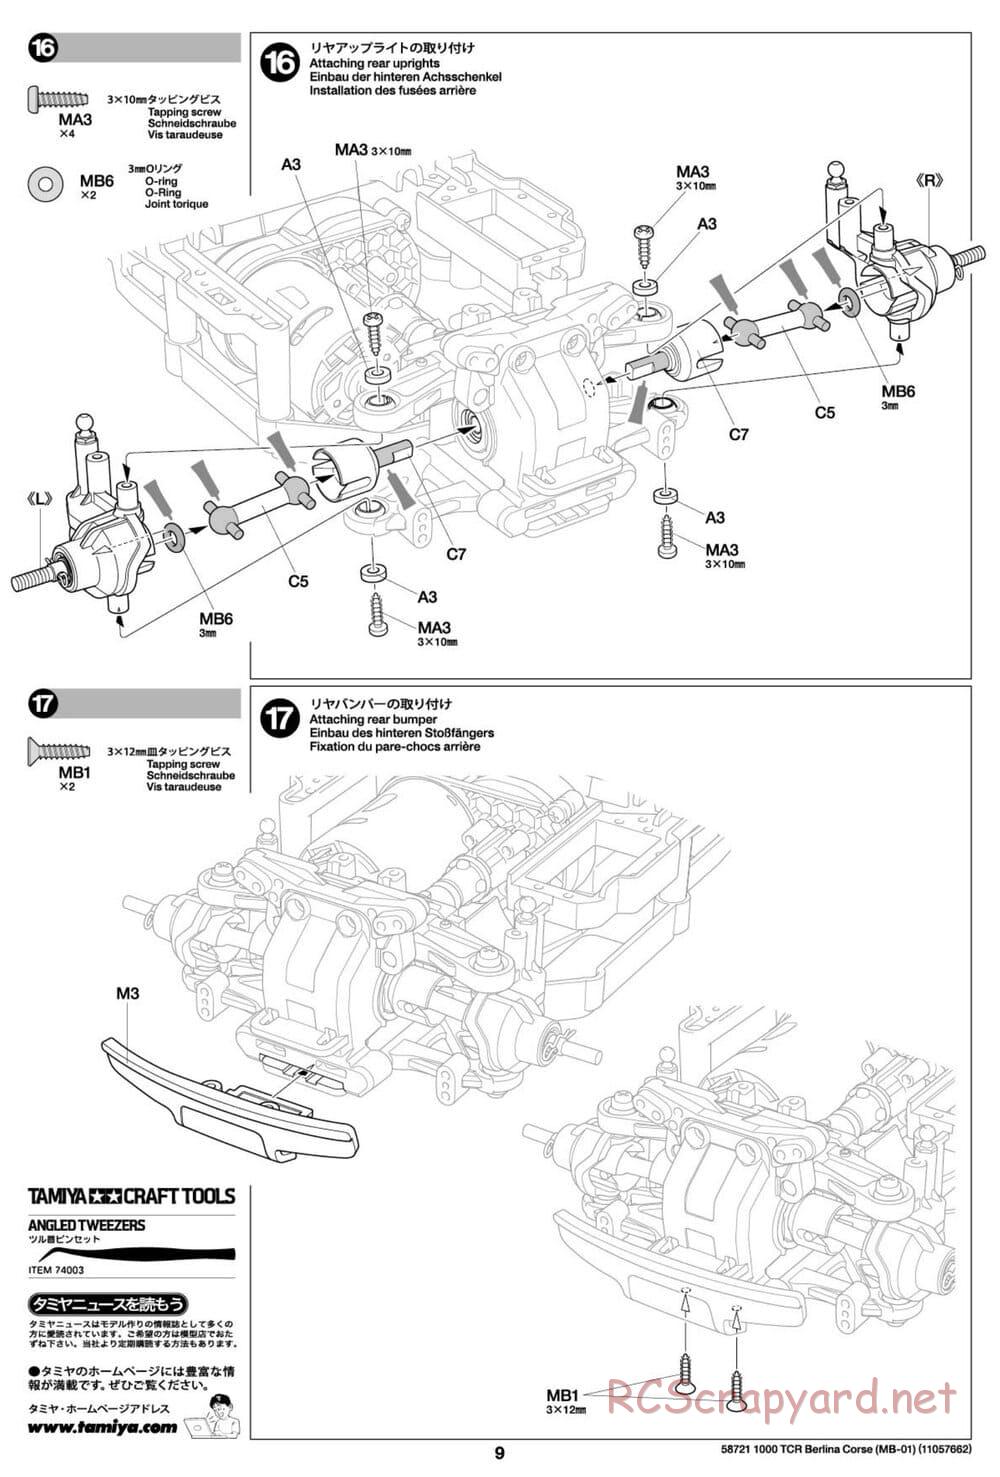 Tamiya - Fiat Abarth 1000 TCR Berlina Corsa - MB-01 Chassis - Manual - Page 9